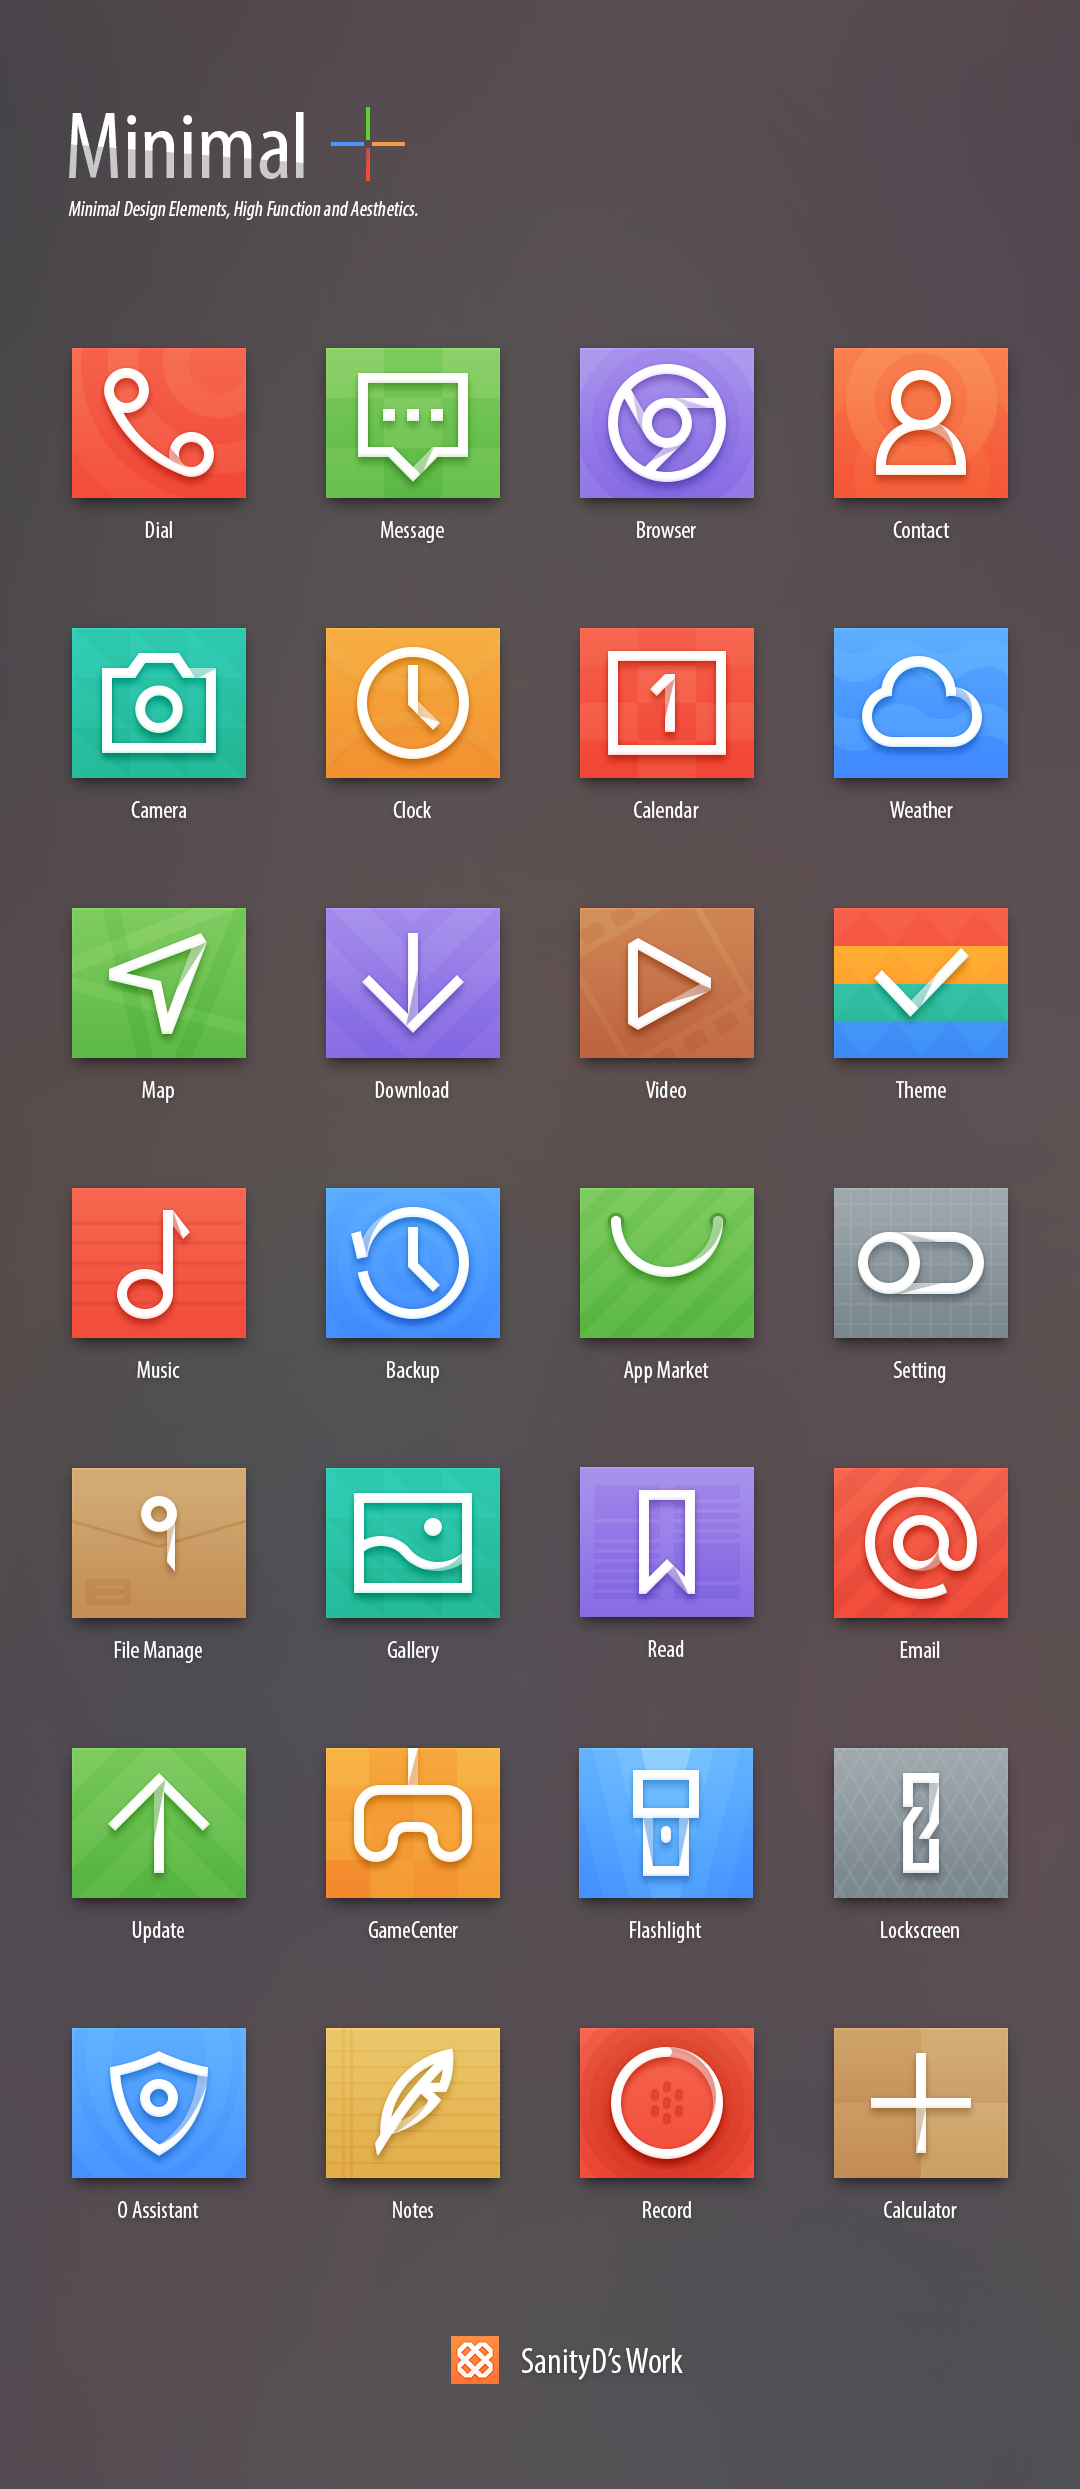 Minimal + android Theme iconset